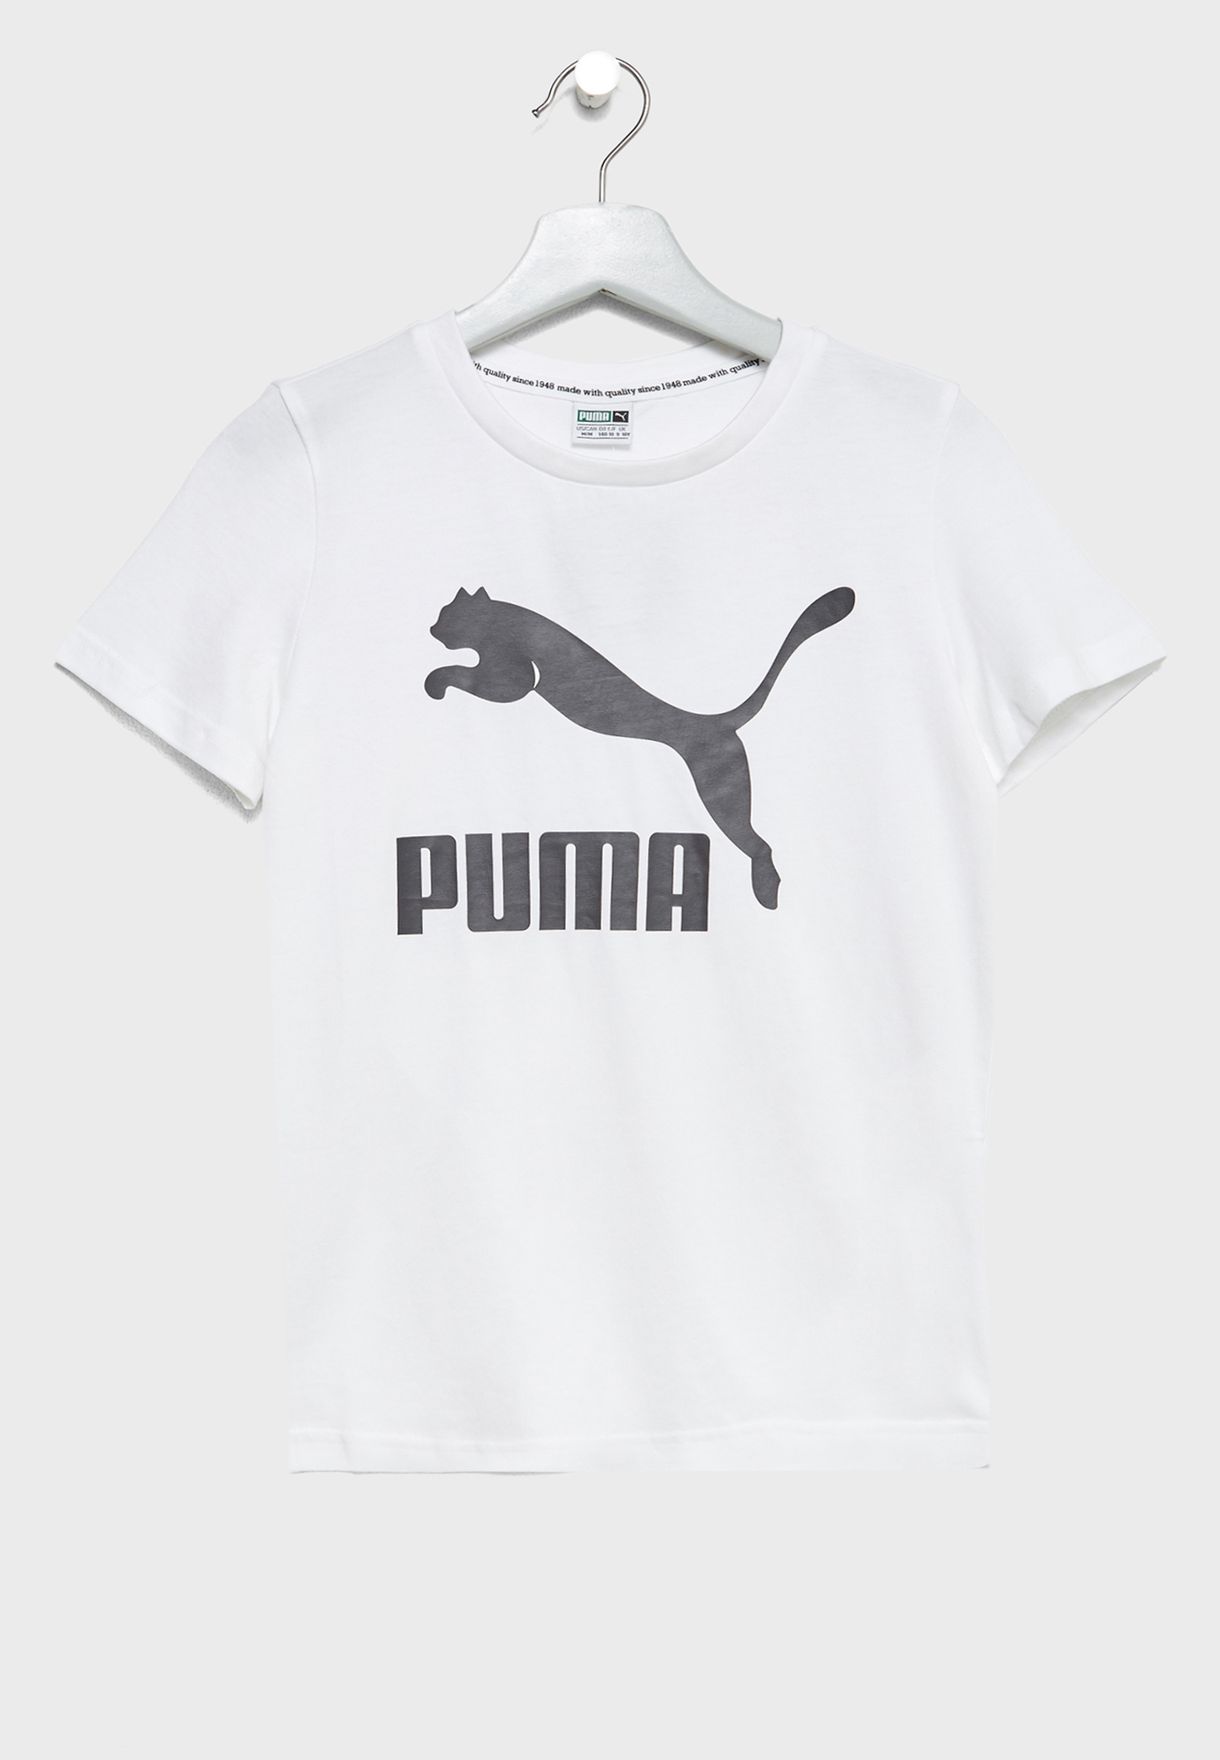 puma made with quality since 1948